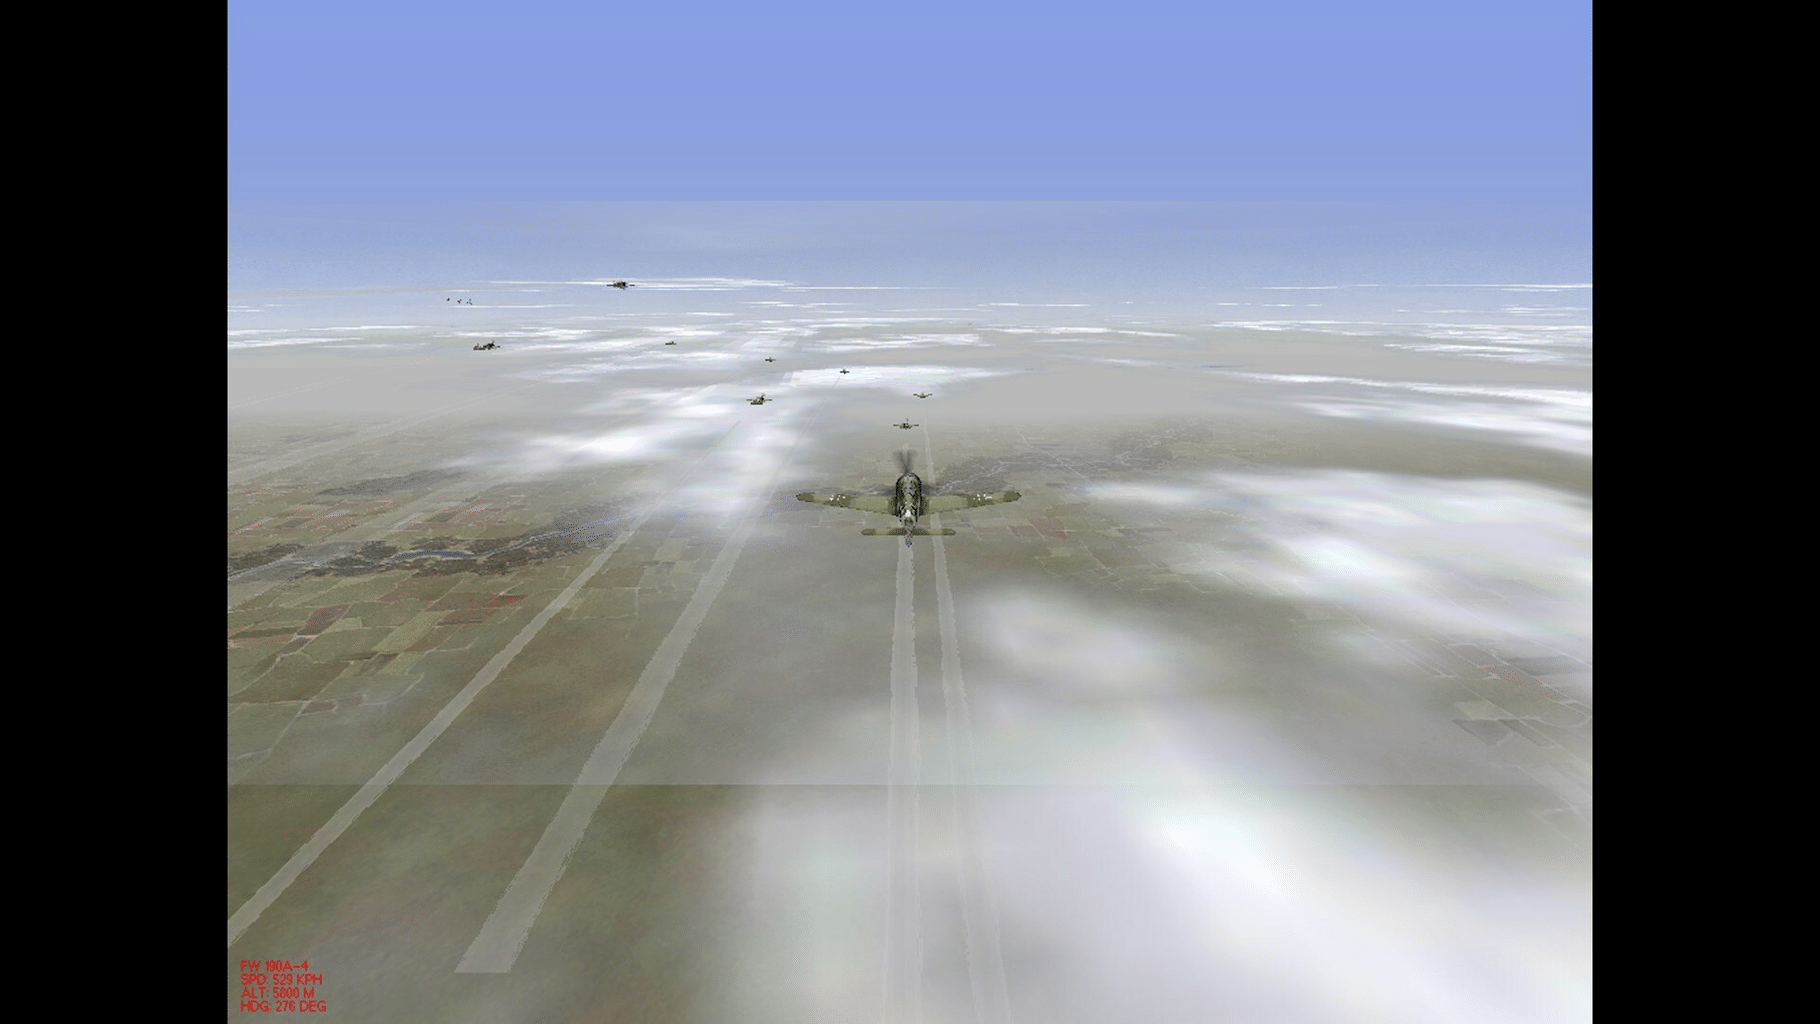 European Air War screenshot